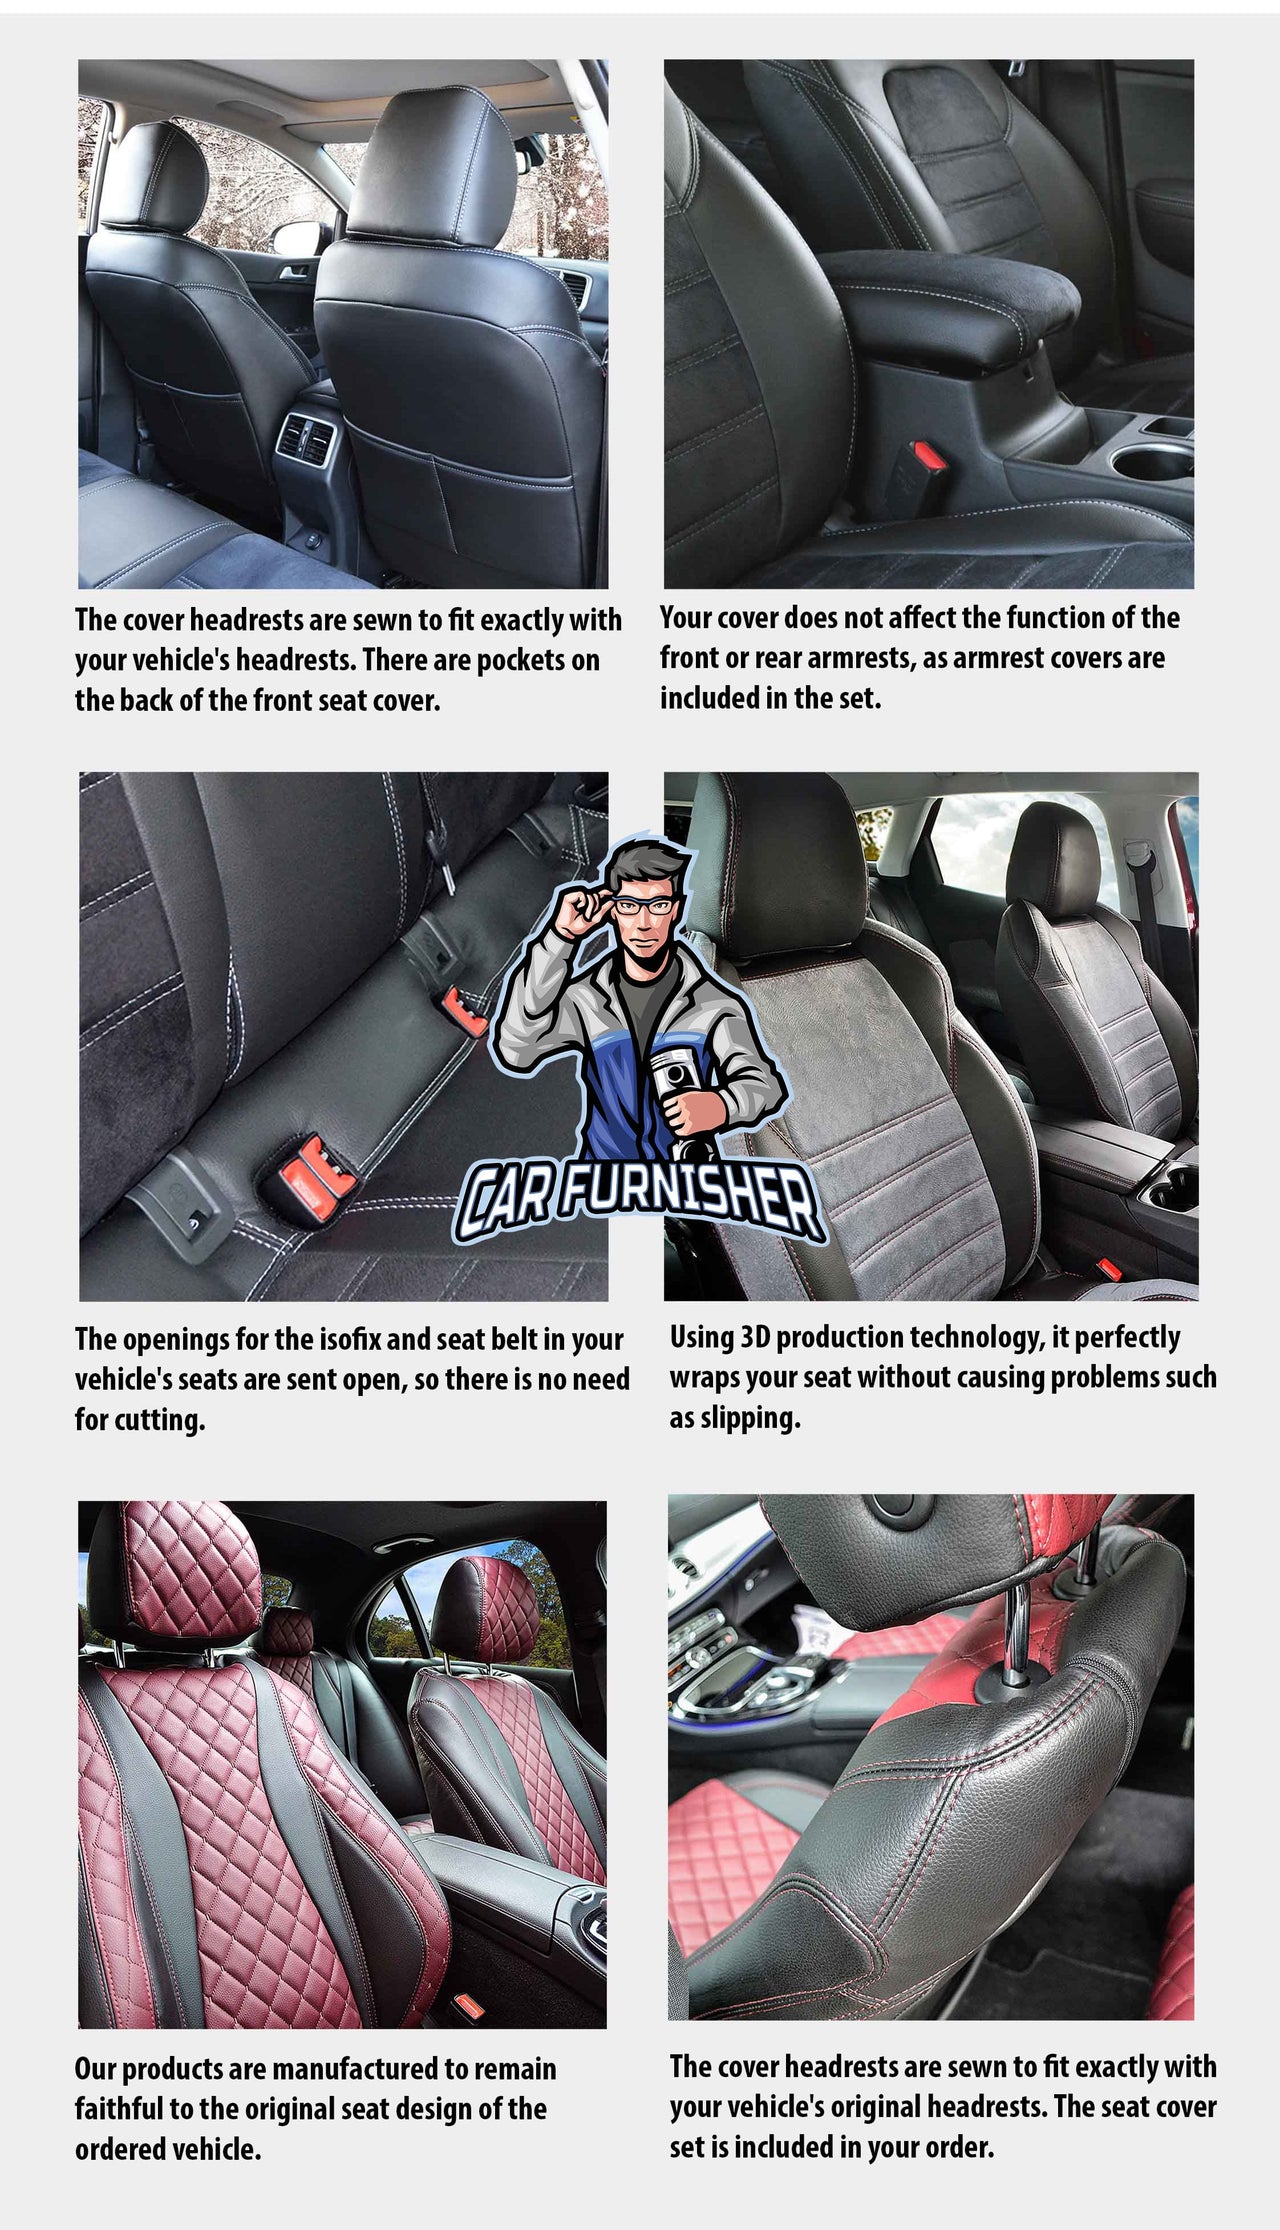 Fiat Brava Seat Covers Madrid Leather Design Dark Gray Leather